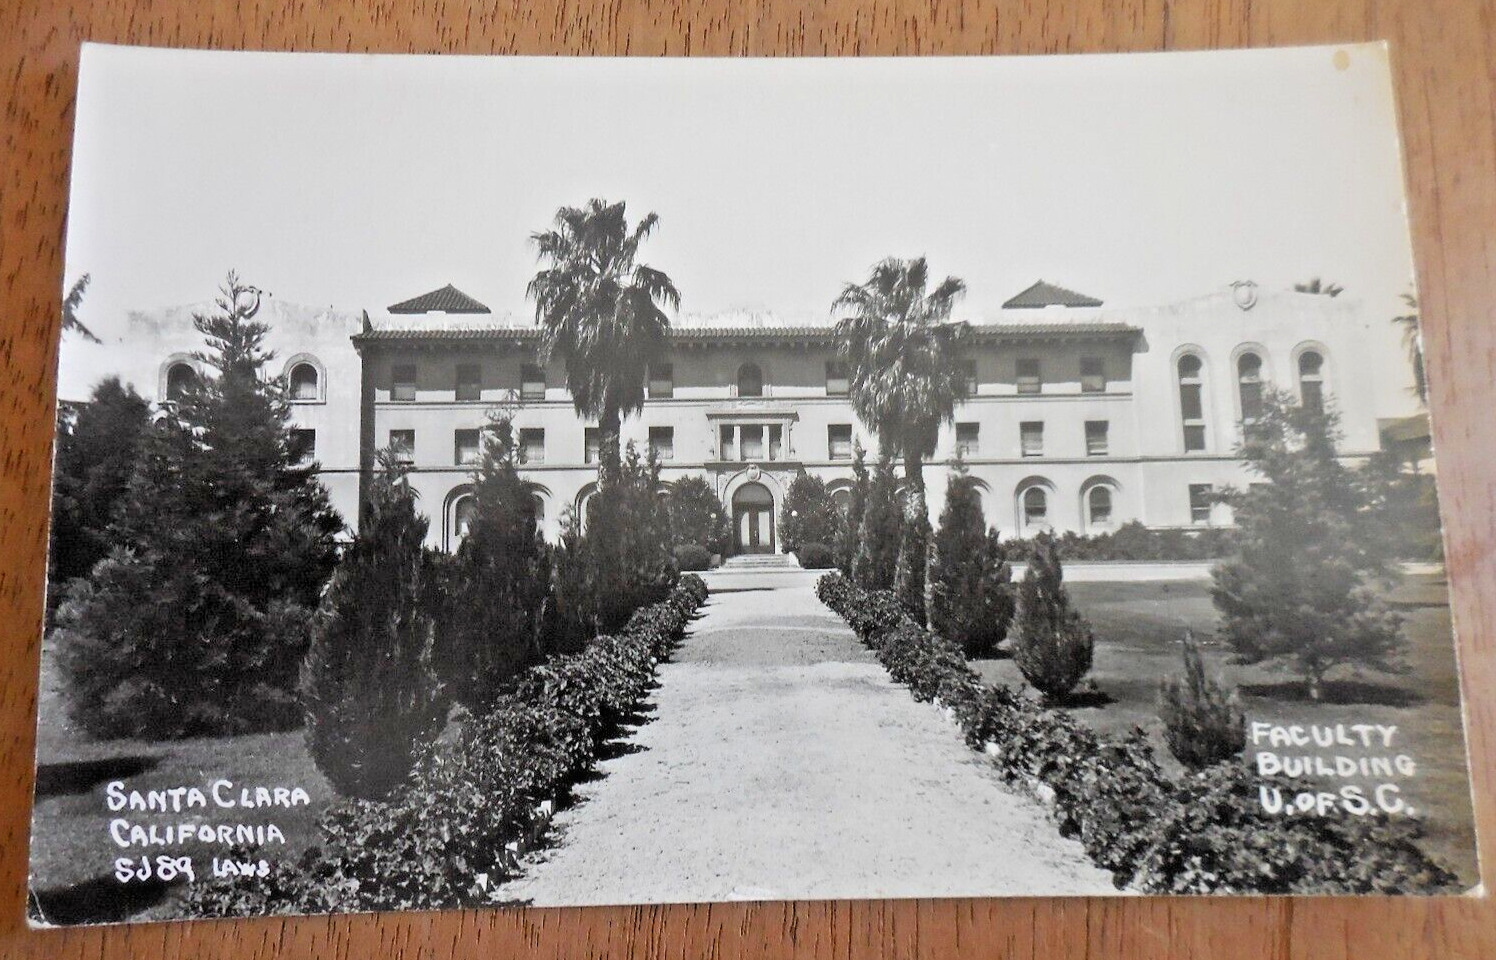 Faculty Building USC Santa Clara California Laws Real Photo Postcard RPPC